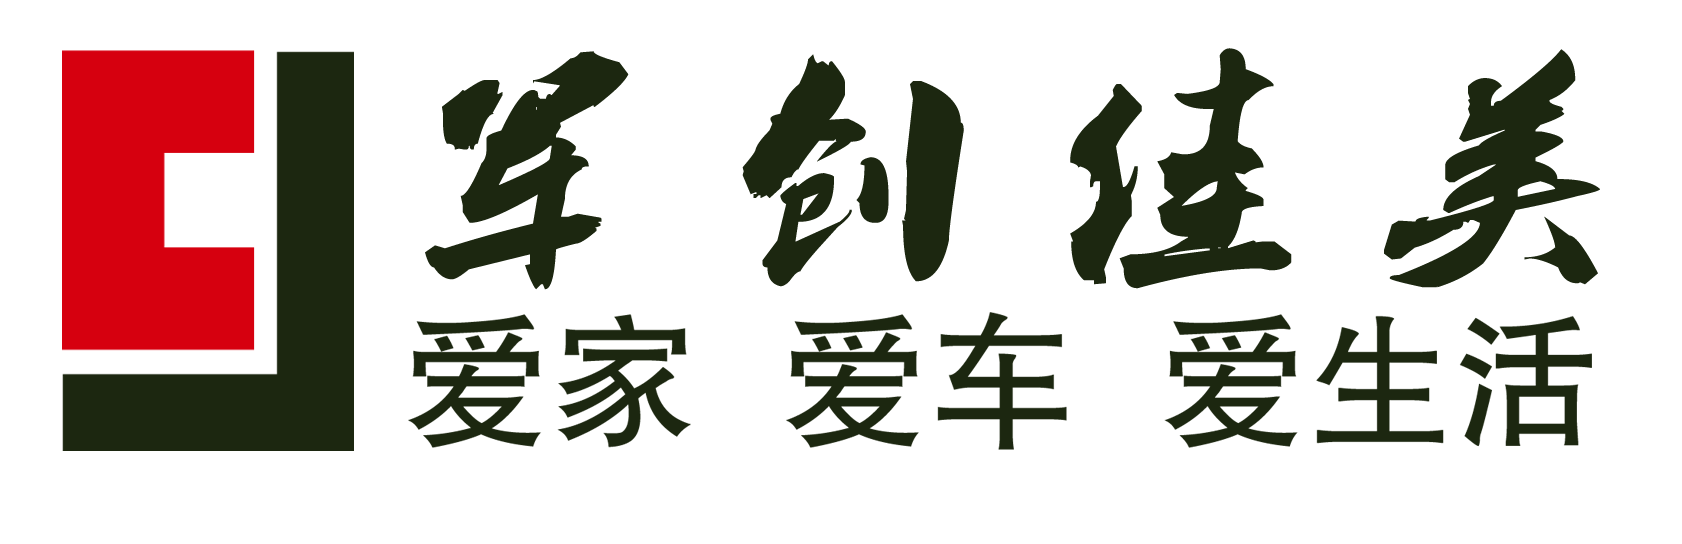 軍創佳美logo